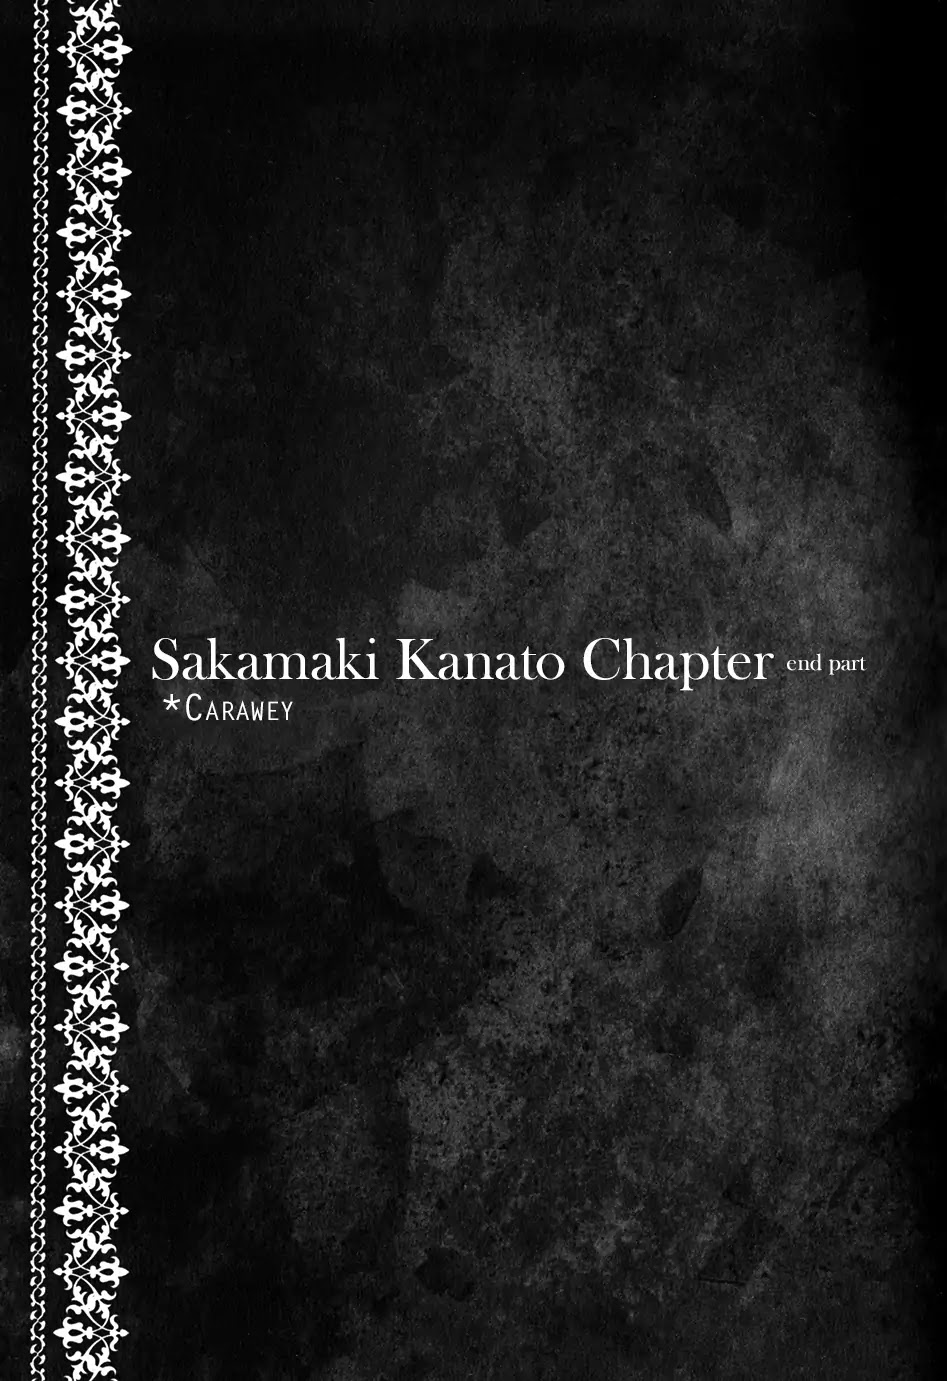 Diabolik Lovers: Sequel - Kanato, Shuu, Reiji Arc - Page 1